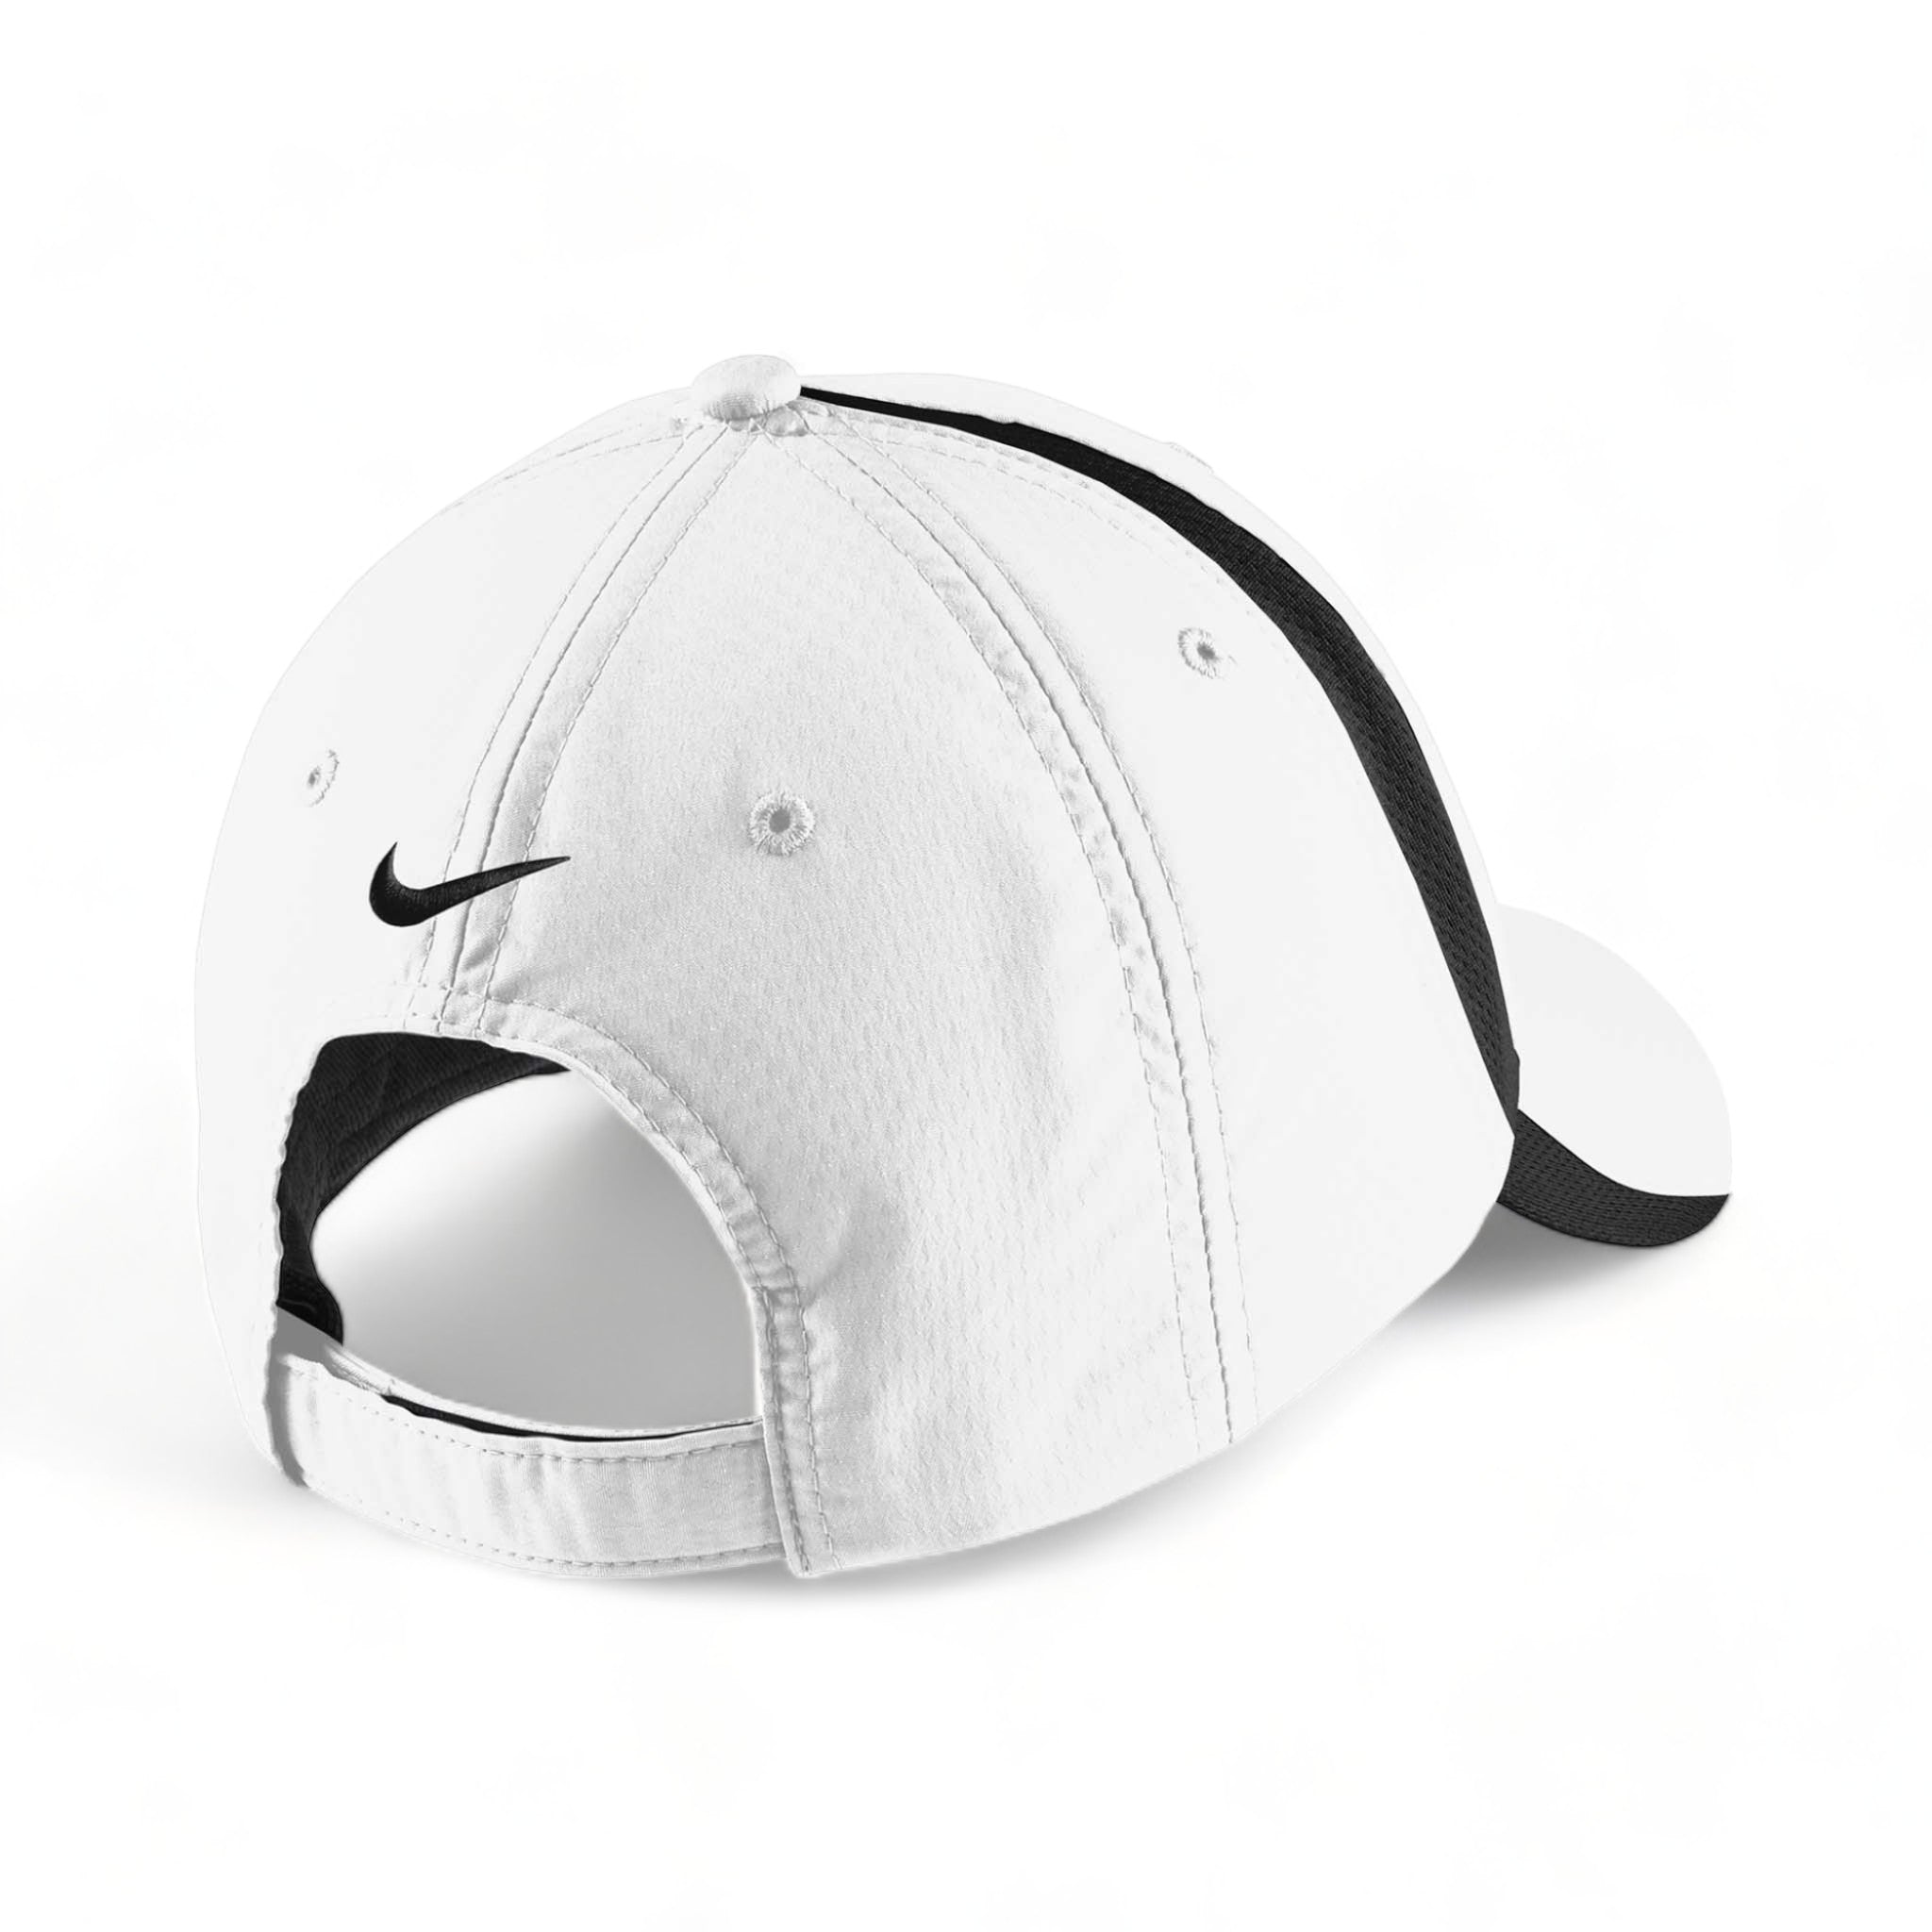 Back view of Nike NKFD9709 custom hat in white and black